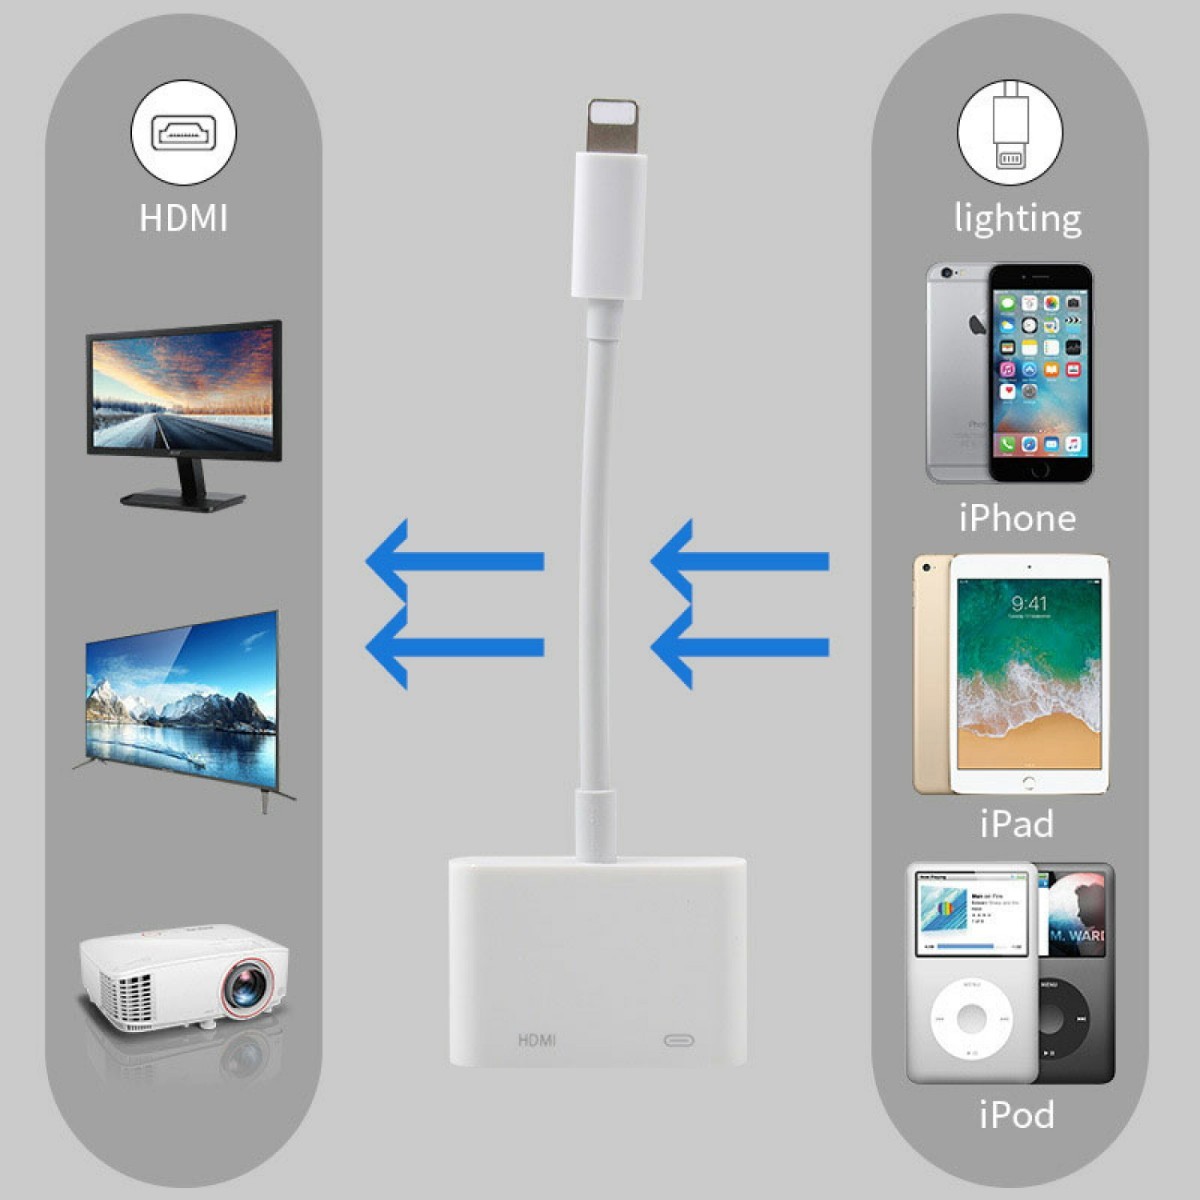 HDMI iPhone 変換ケーブル アダプタ テレビ HDMIケーブルセット